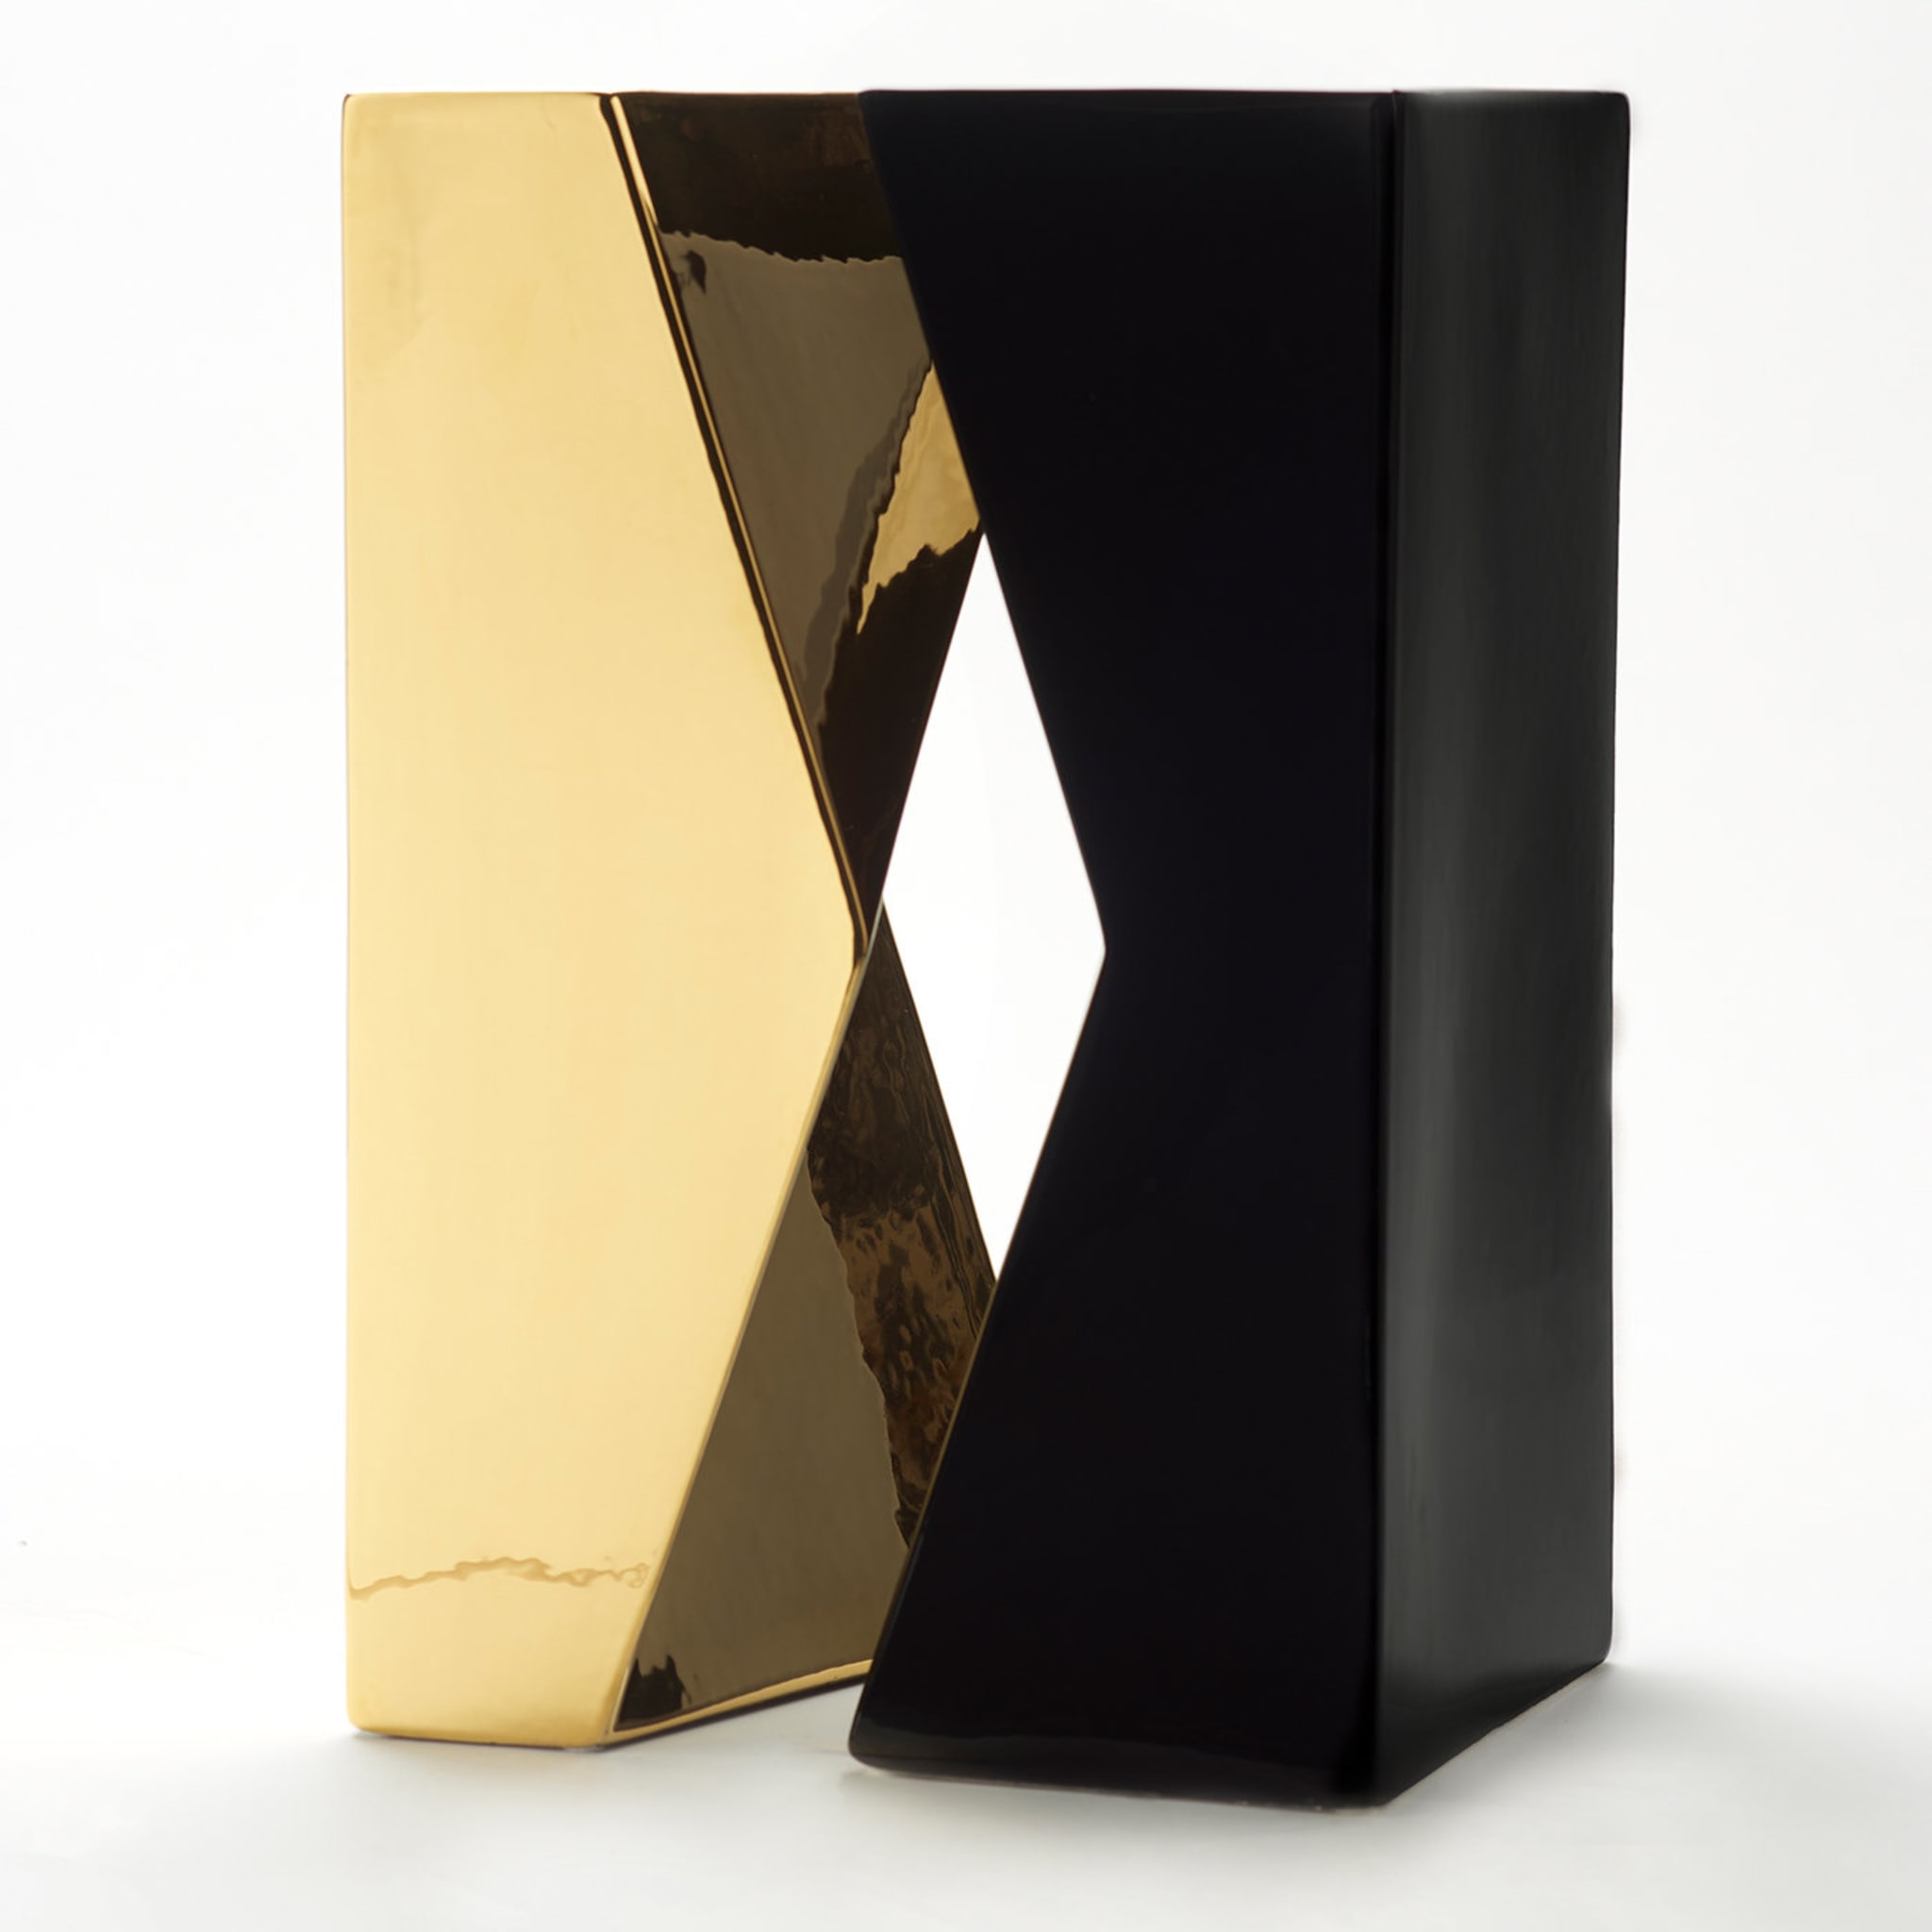 Verso Set of 2 Gold and Black Vases by Antonio Saporito - Alternative view 2